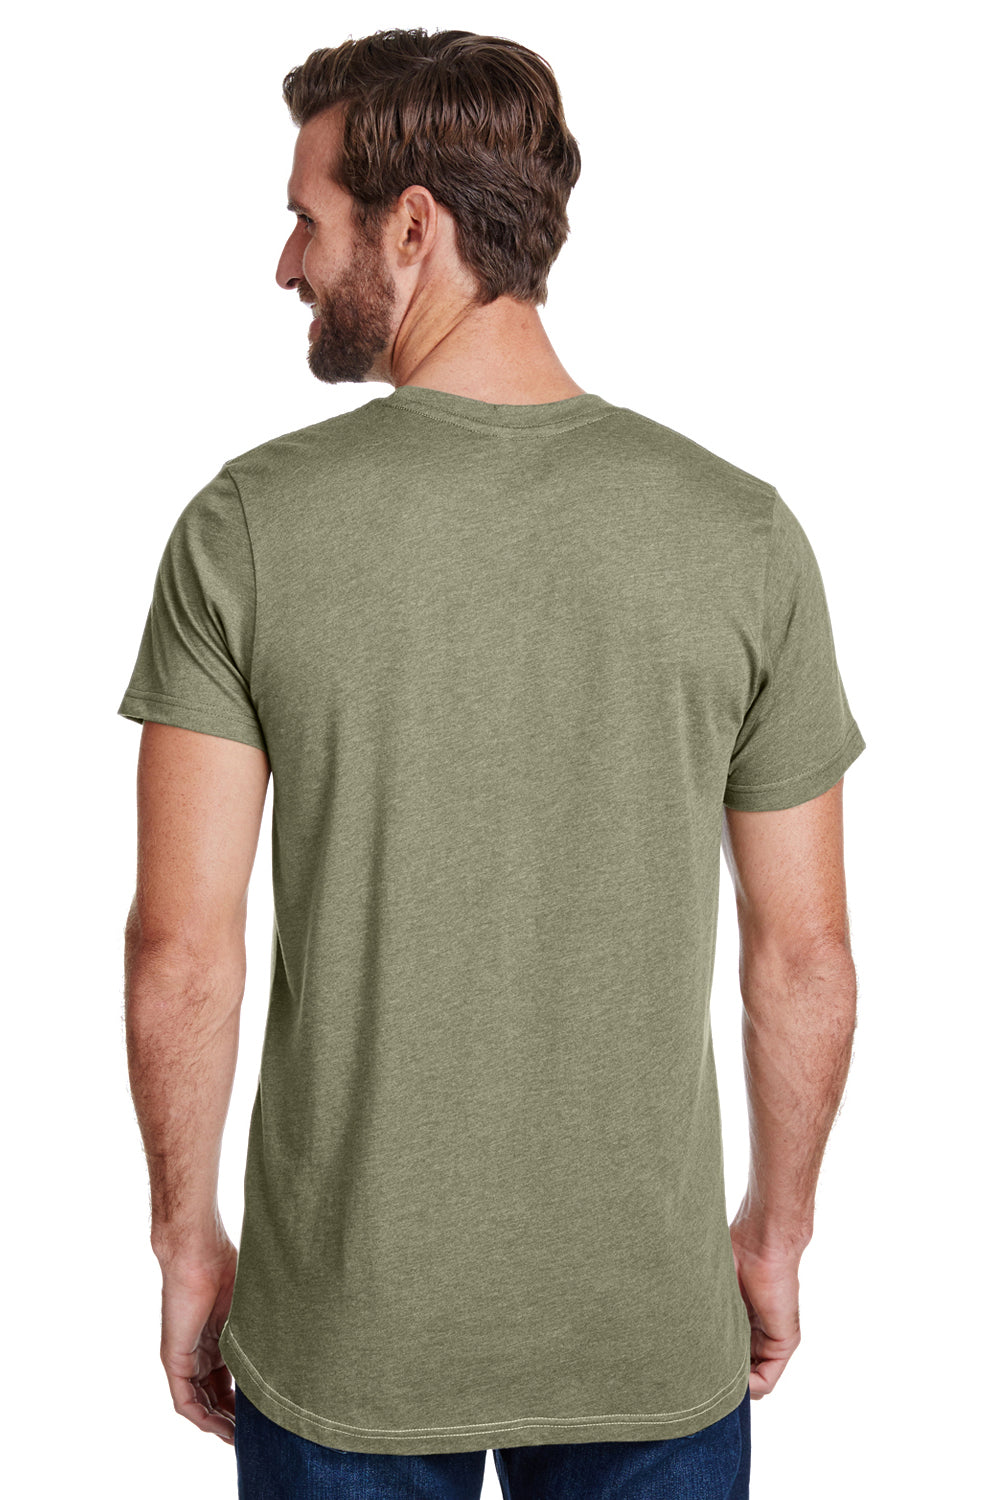 LAT LA6911 Mens Fine Jersey Forward Shoulder Short Sleeve Crewneck T-Shirt Heather Natural/Military Green Back